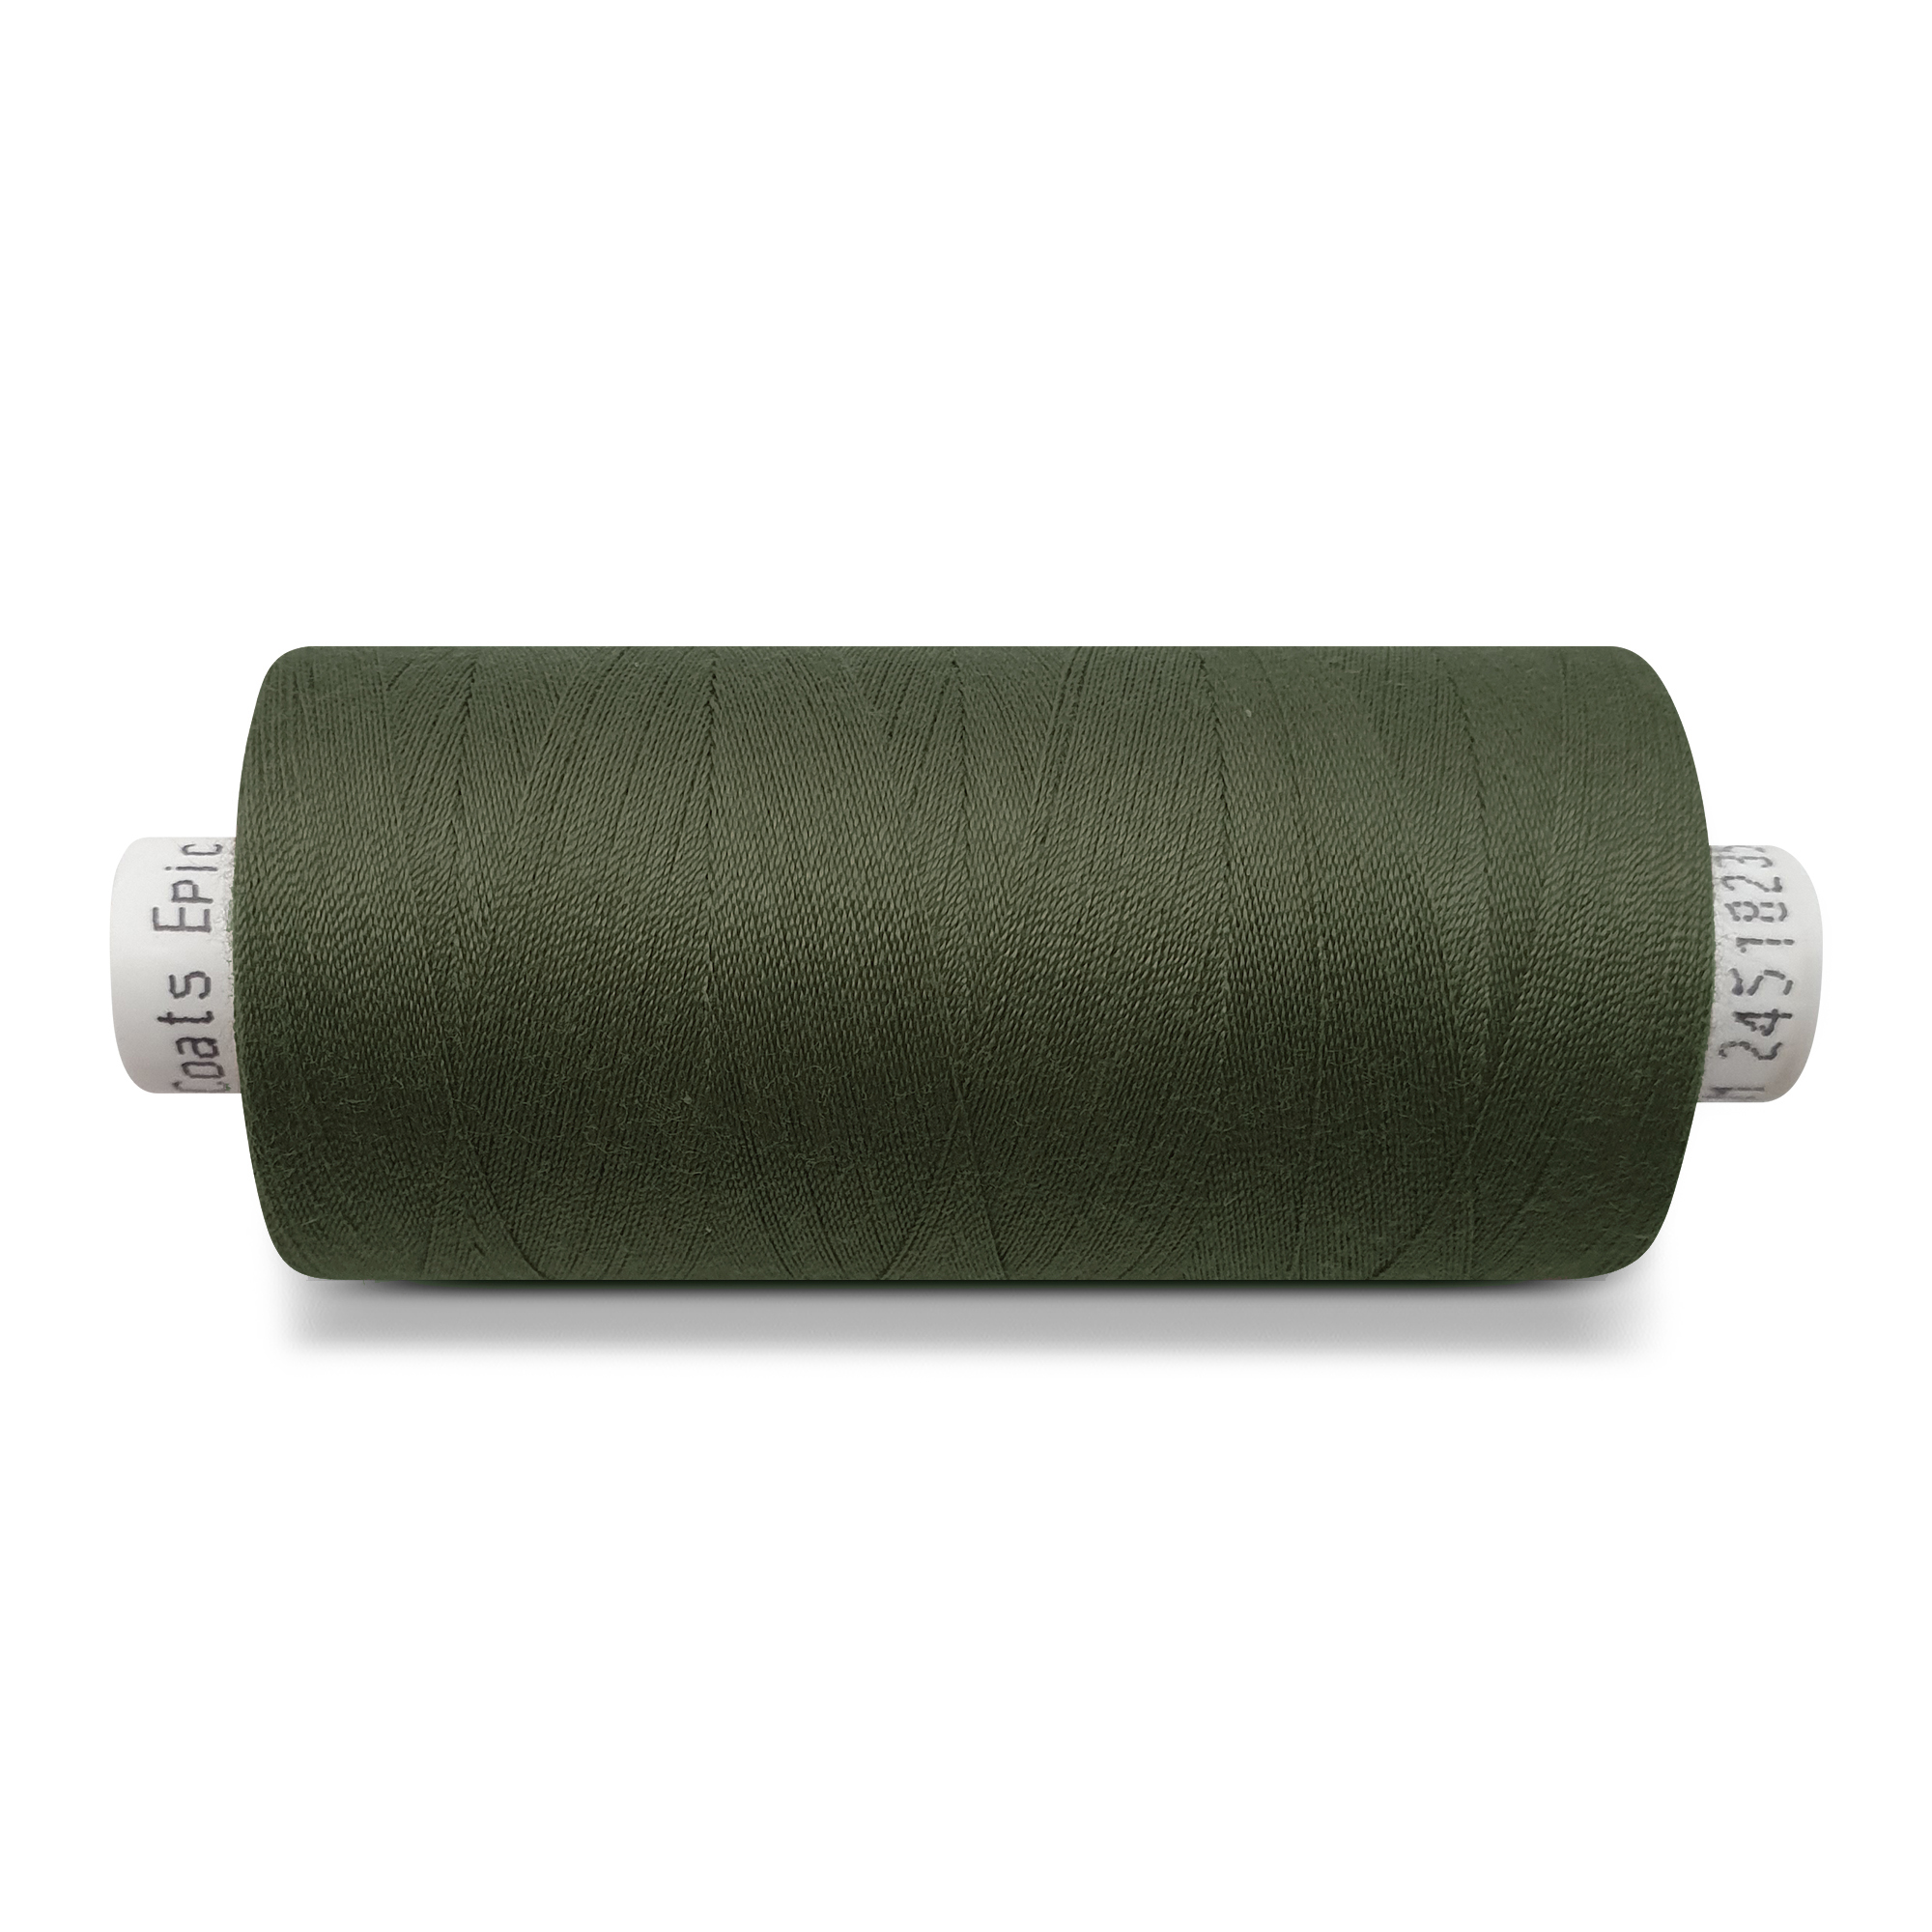 Leather/Sewing thread matt olive green